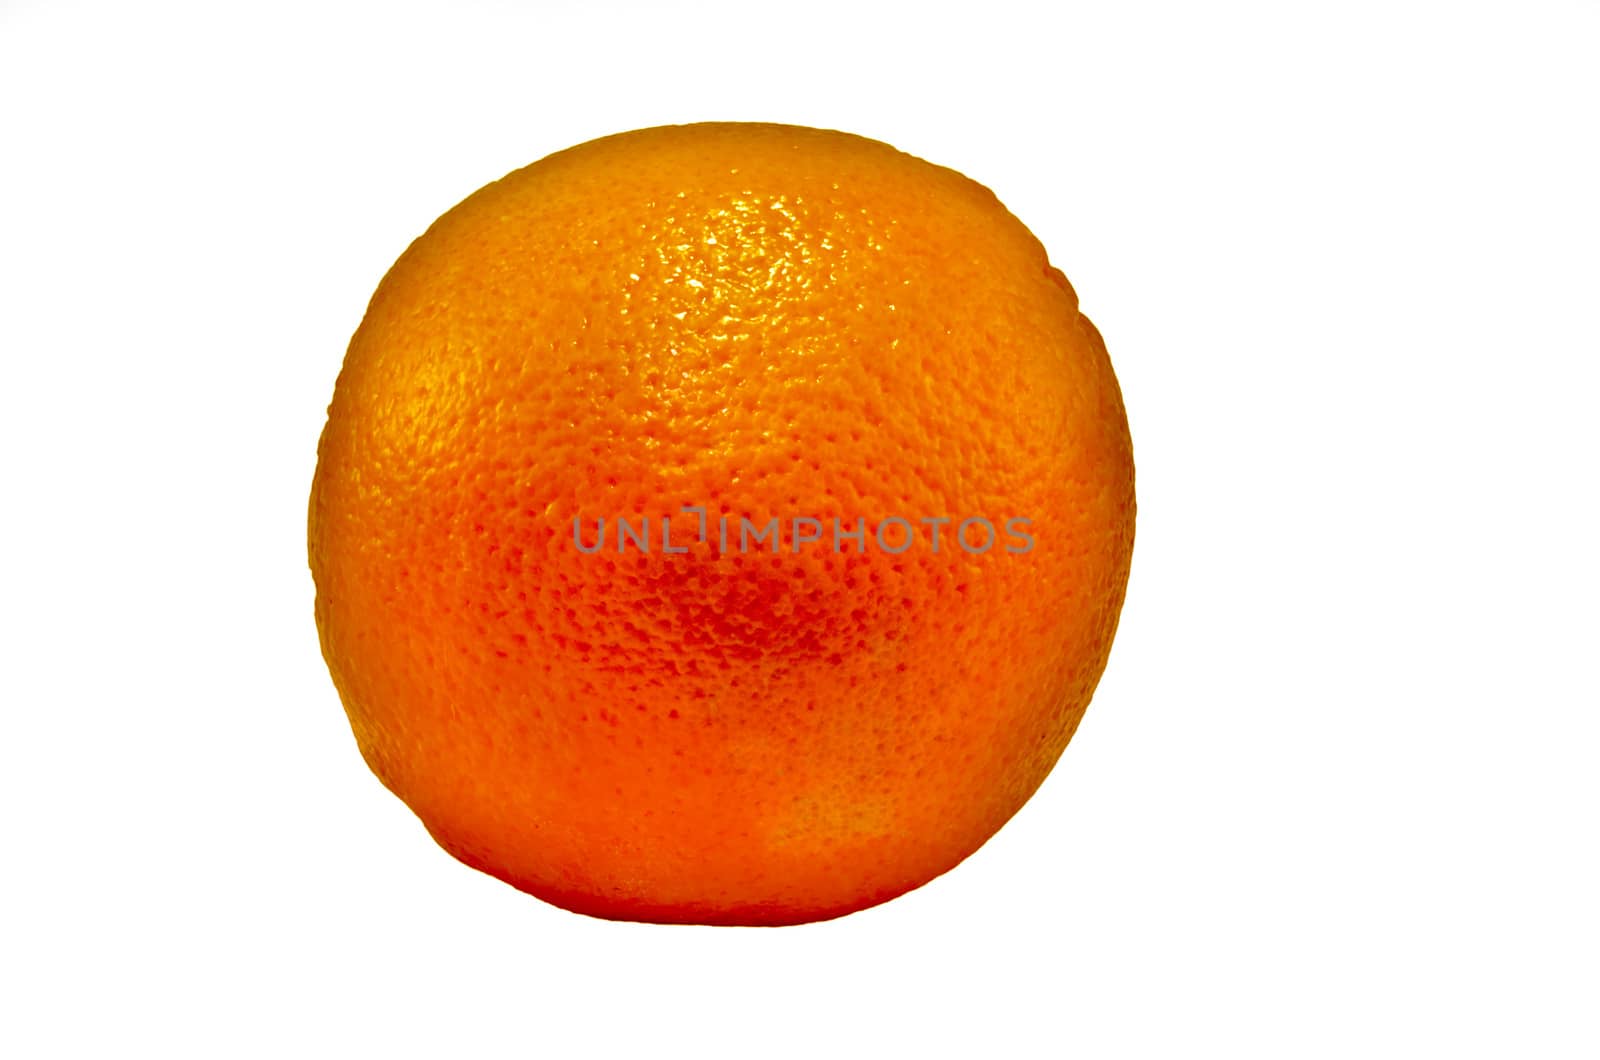 Vitamin-rich orange.
Isolated on white.